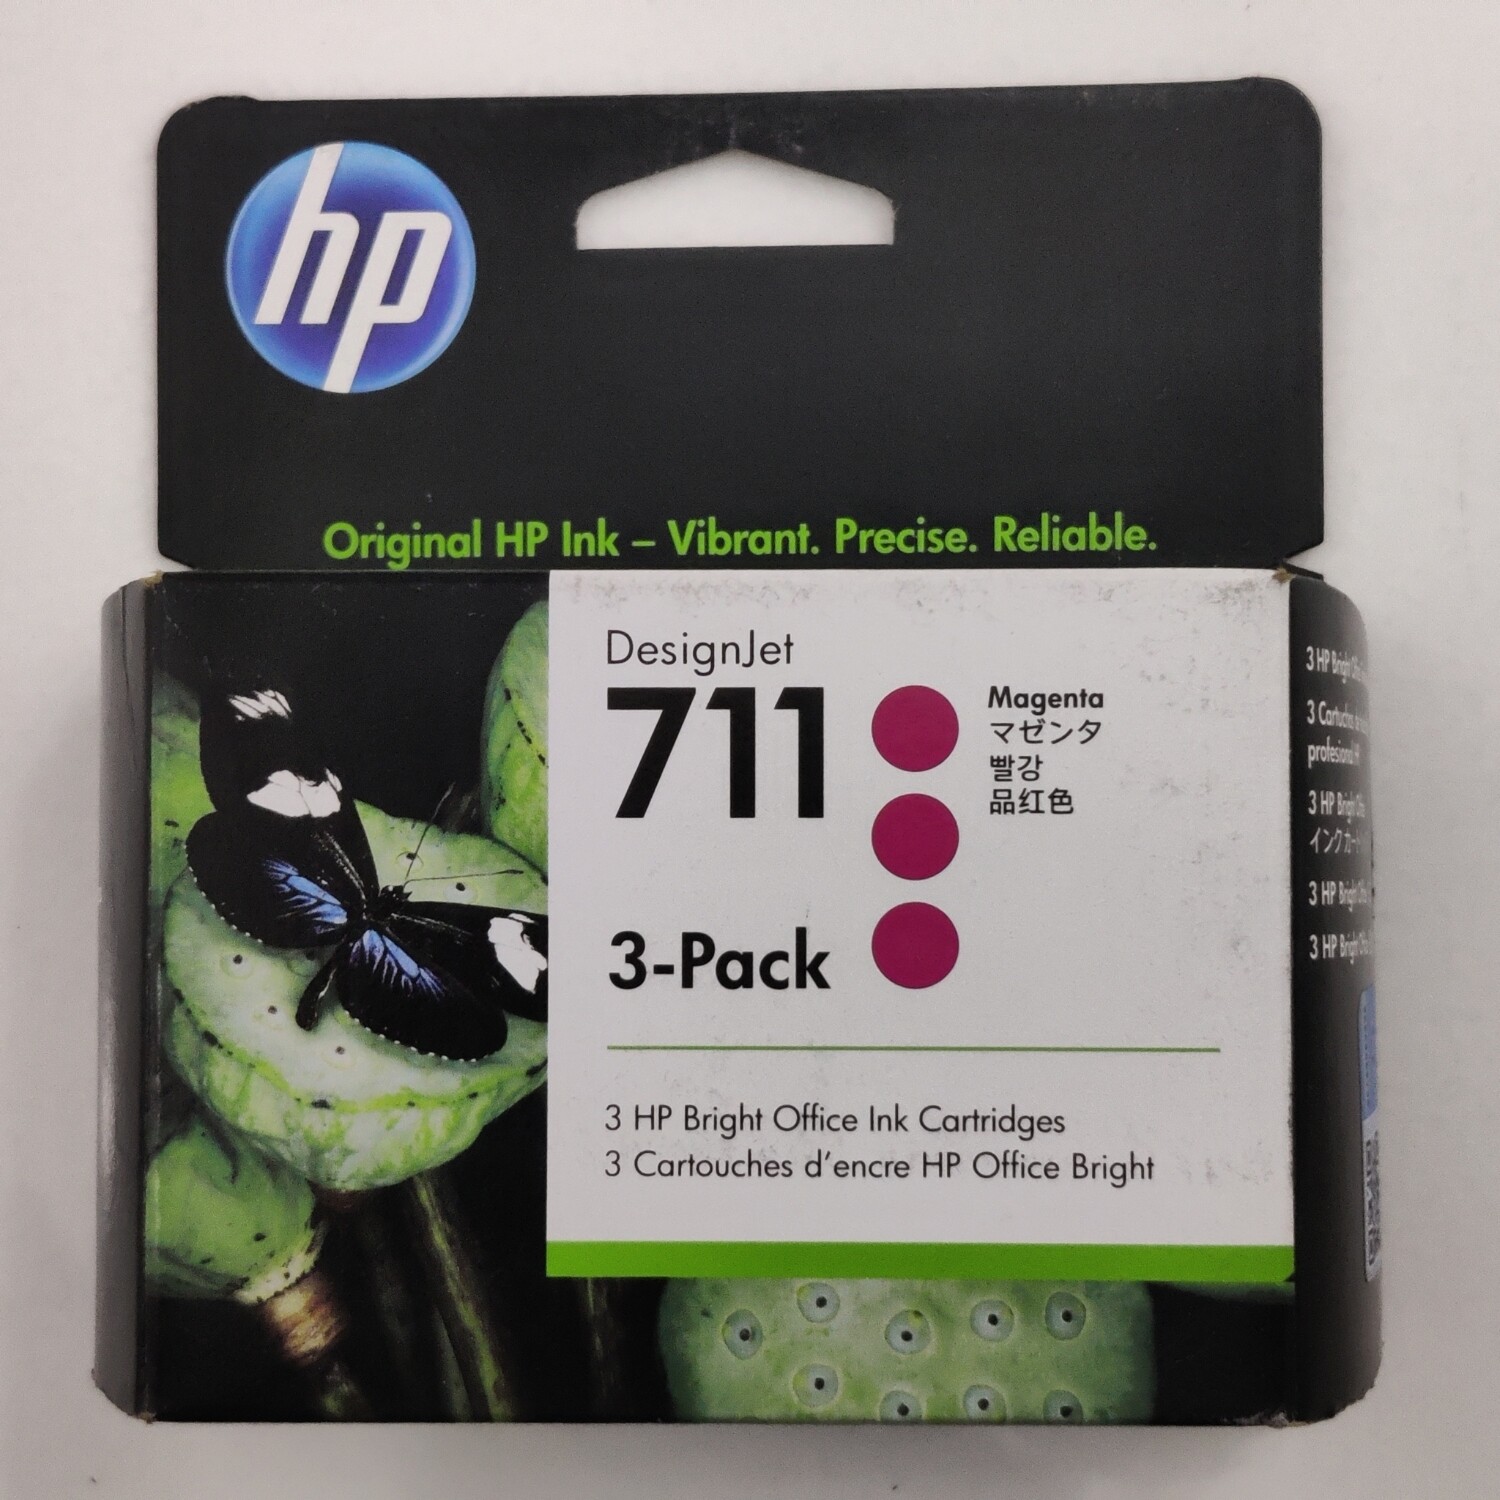 HP DesignJet 711 Magenta Ink Cartridge, 3-Pack (CZ135A)